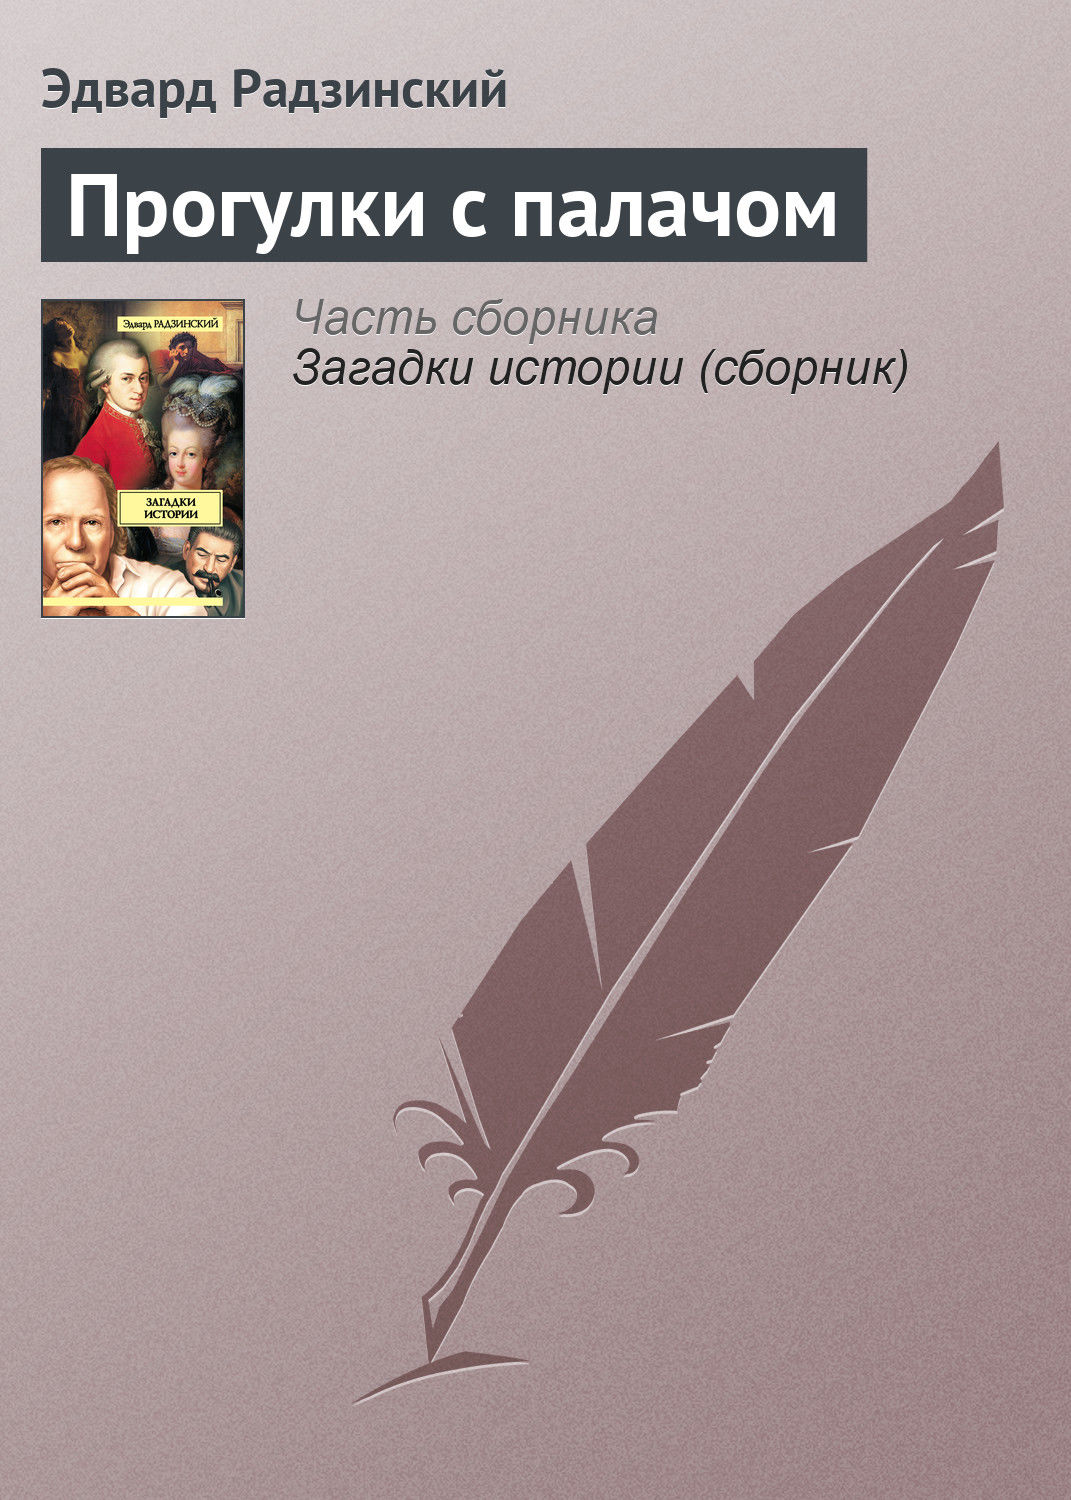 download encyclopedia of indian philosophies vol 2 indian